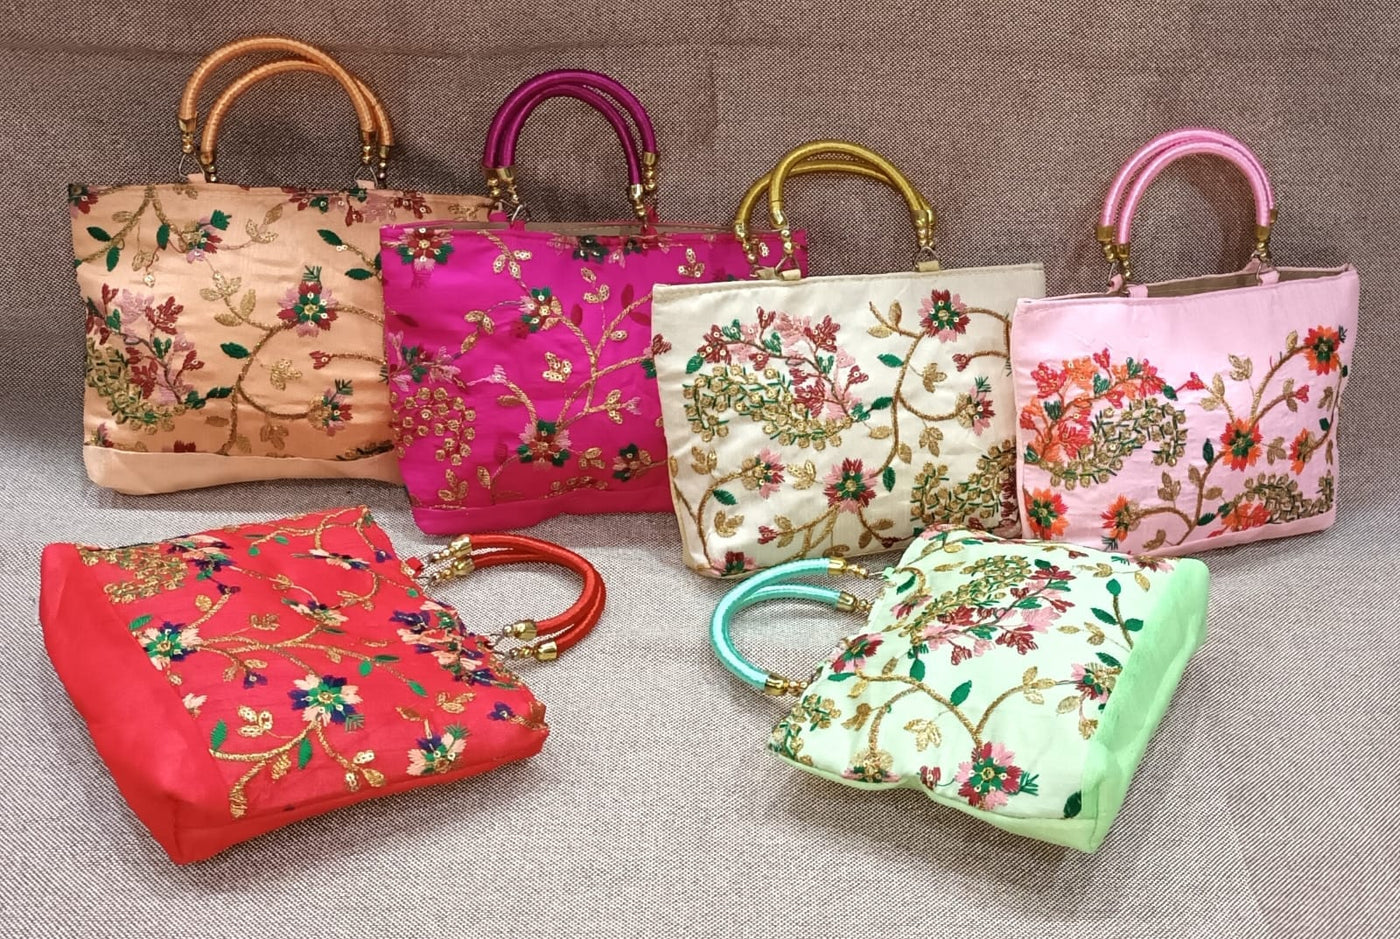 Best handbags for women from top handbag brands | - Times of India